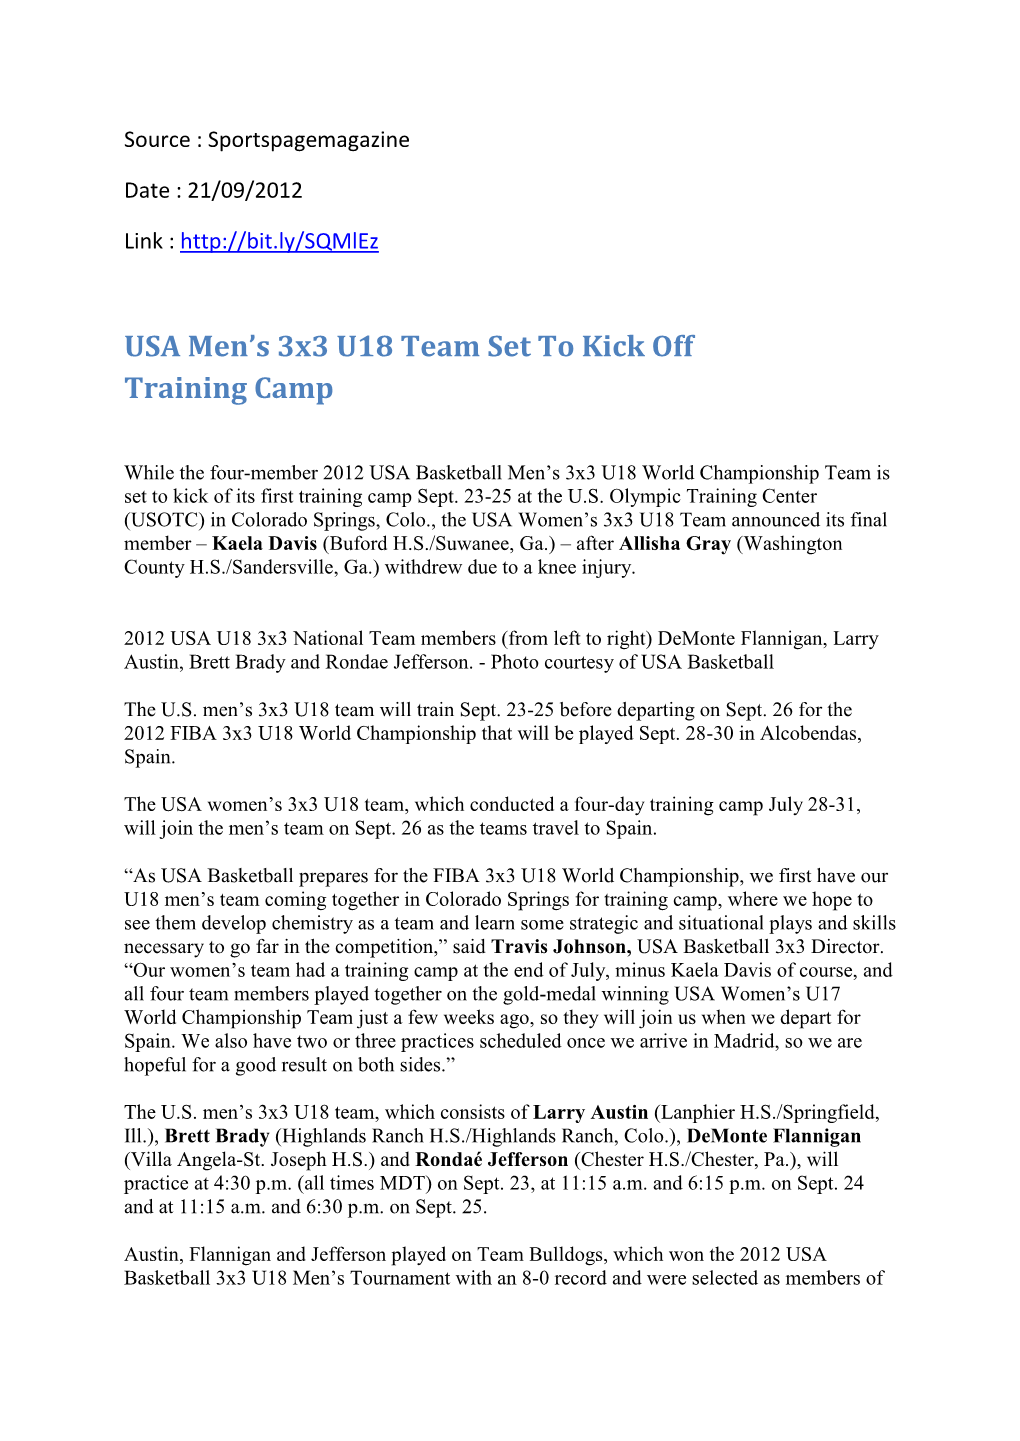 USA Men's 3X3 U18 Team Set to Kick Off Training Camp